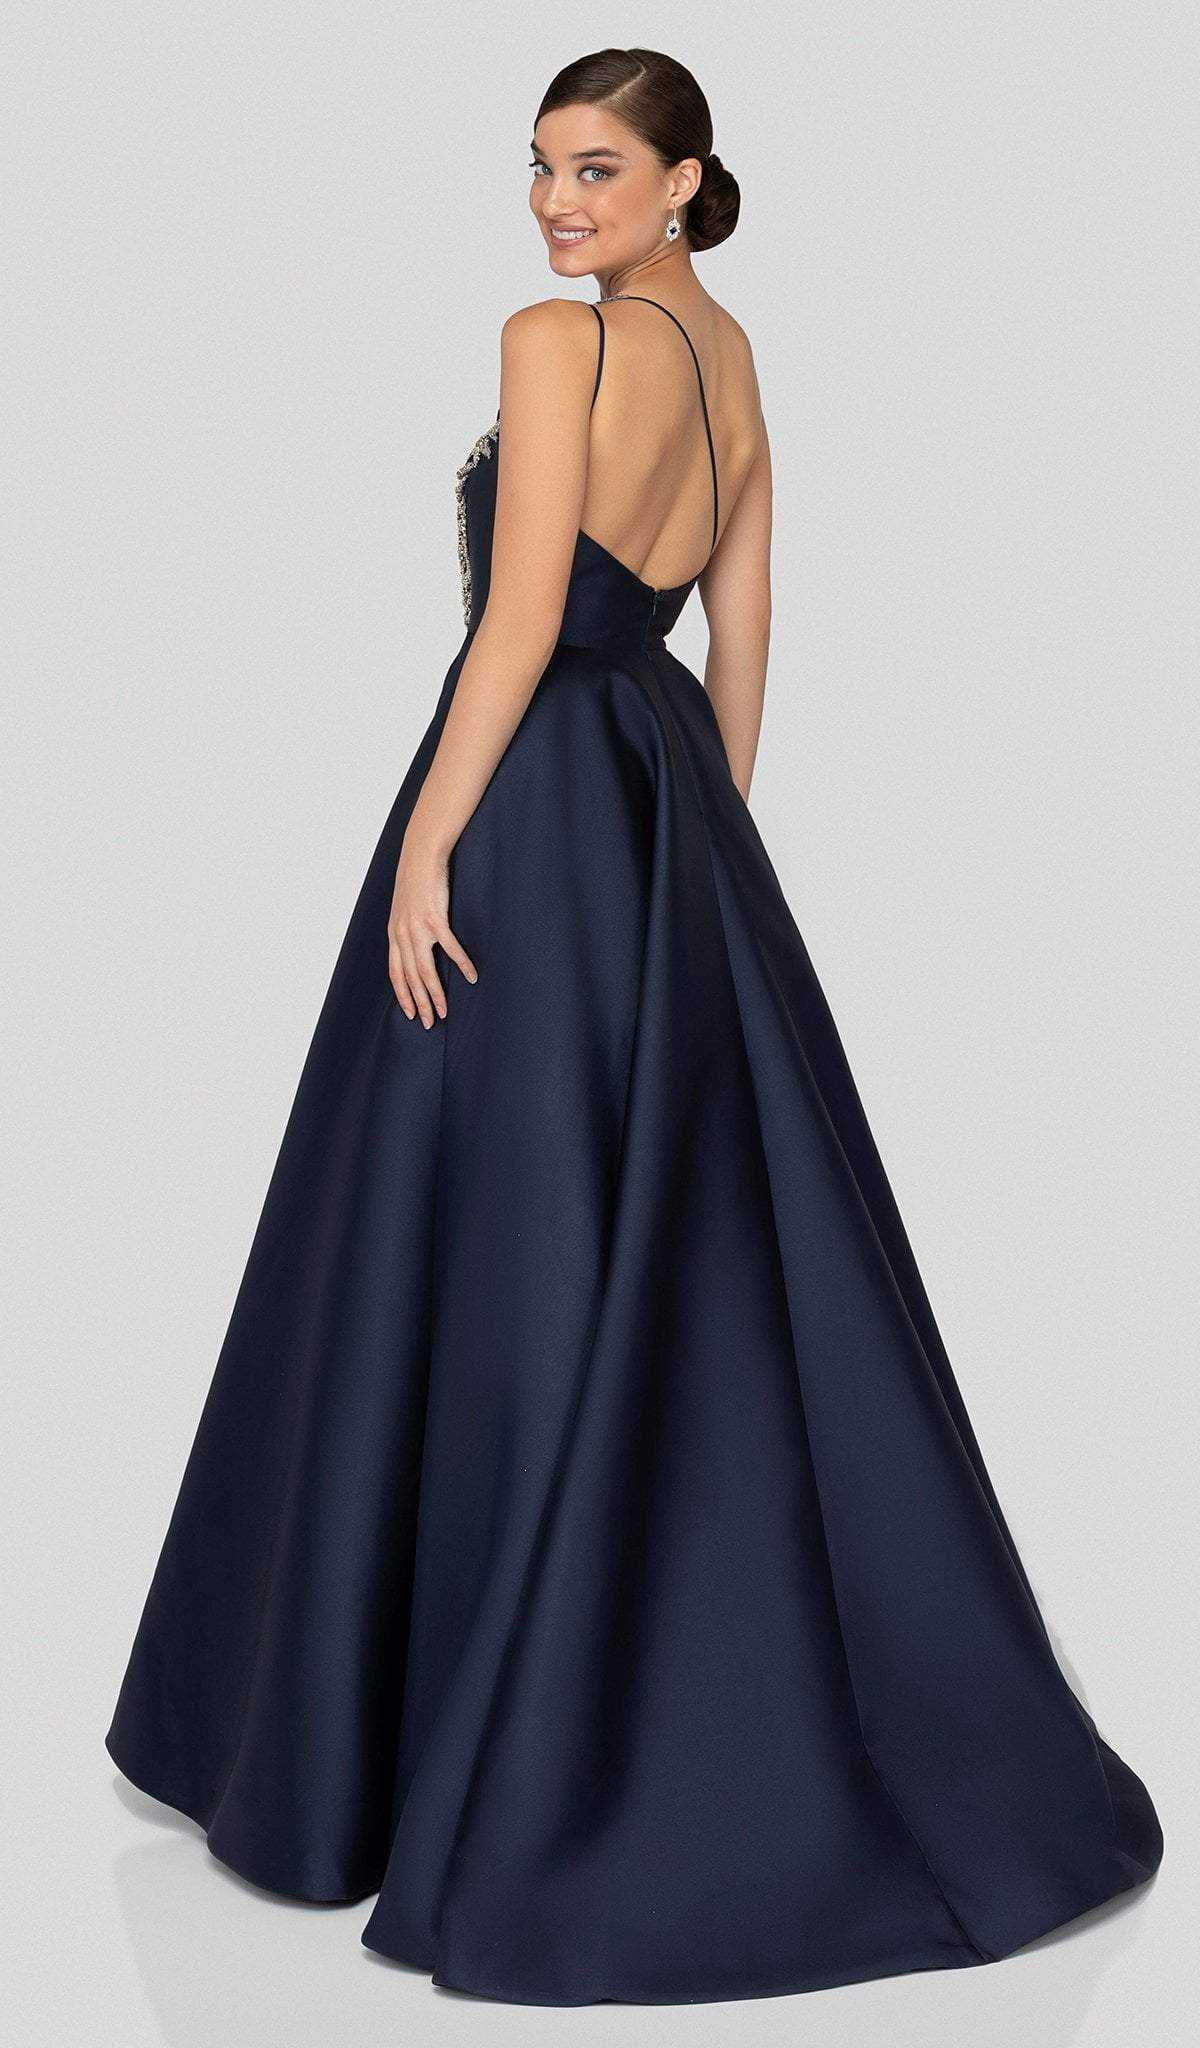 Terani Couture, Terani Couture - 1912E9202 One Shoulder Dazzling Fern Accent Gown